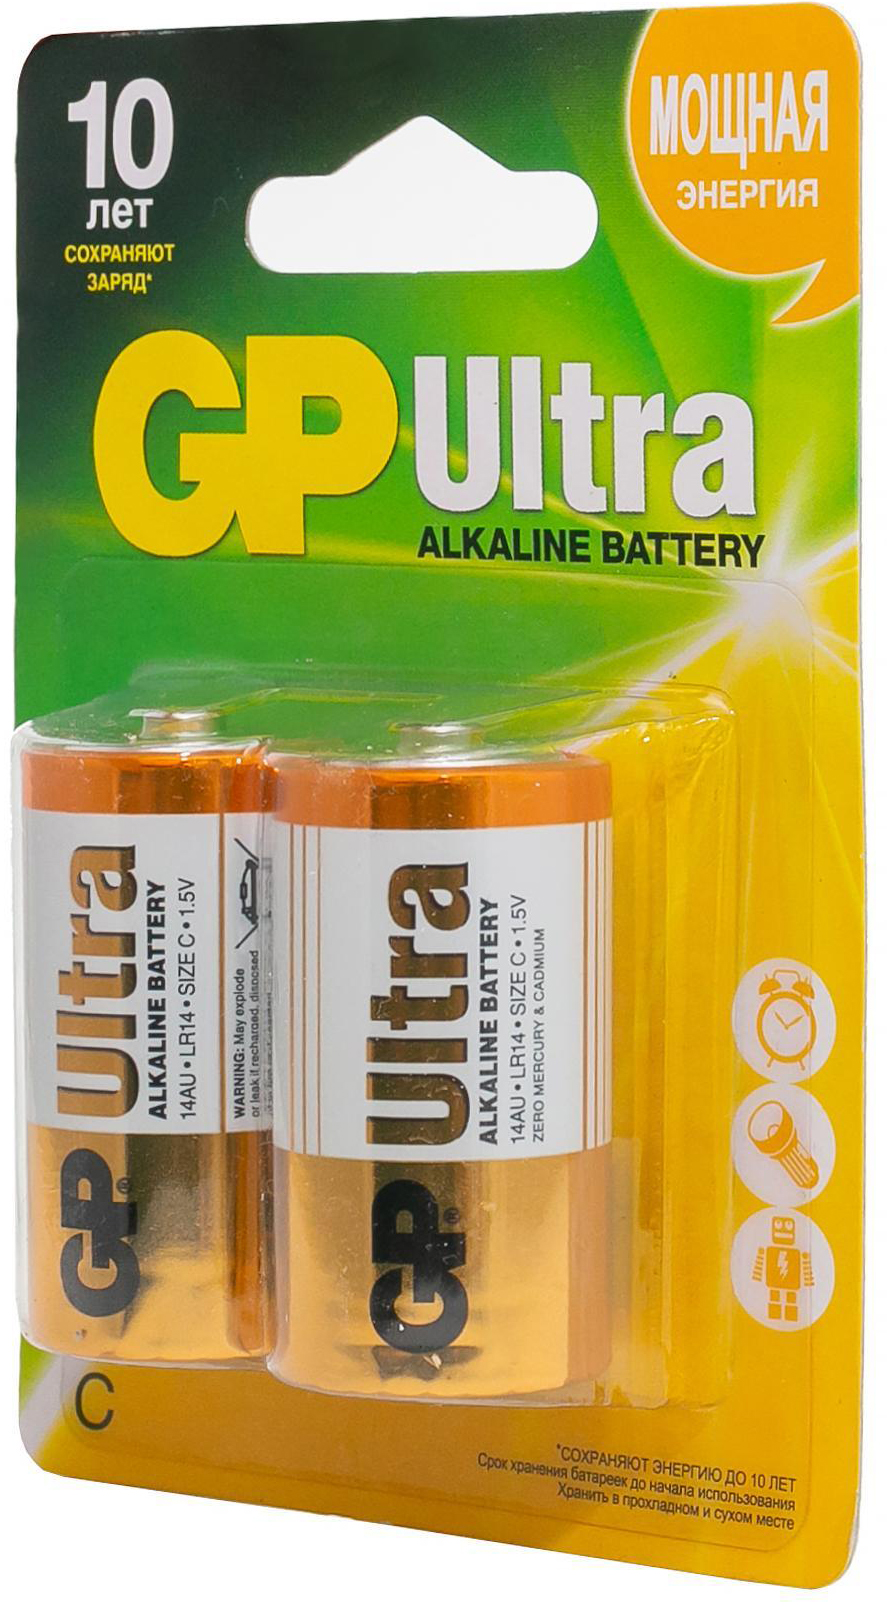 Алкалиновые батарейки GP Ultra Alkaline 14А типоразмера C (Блистер, 2 шт) цена и фото